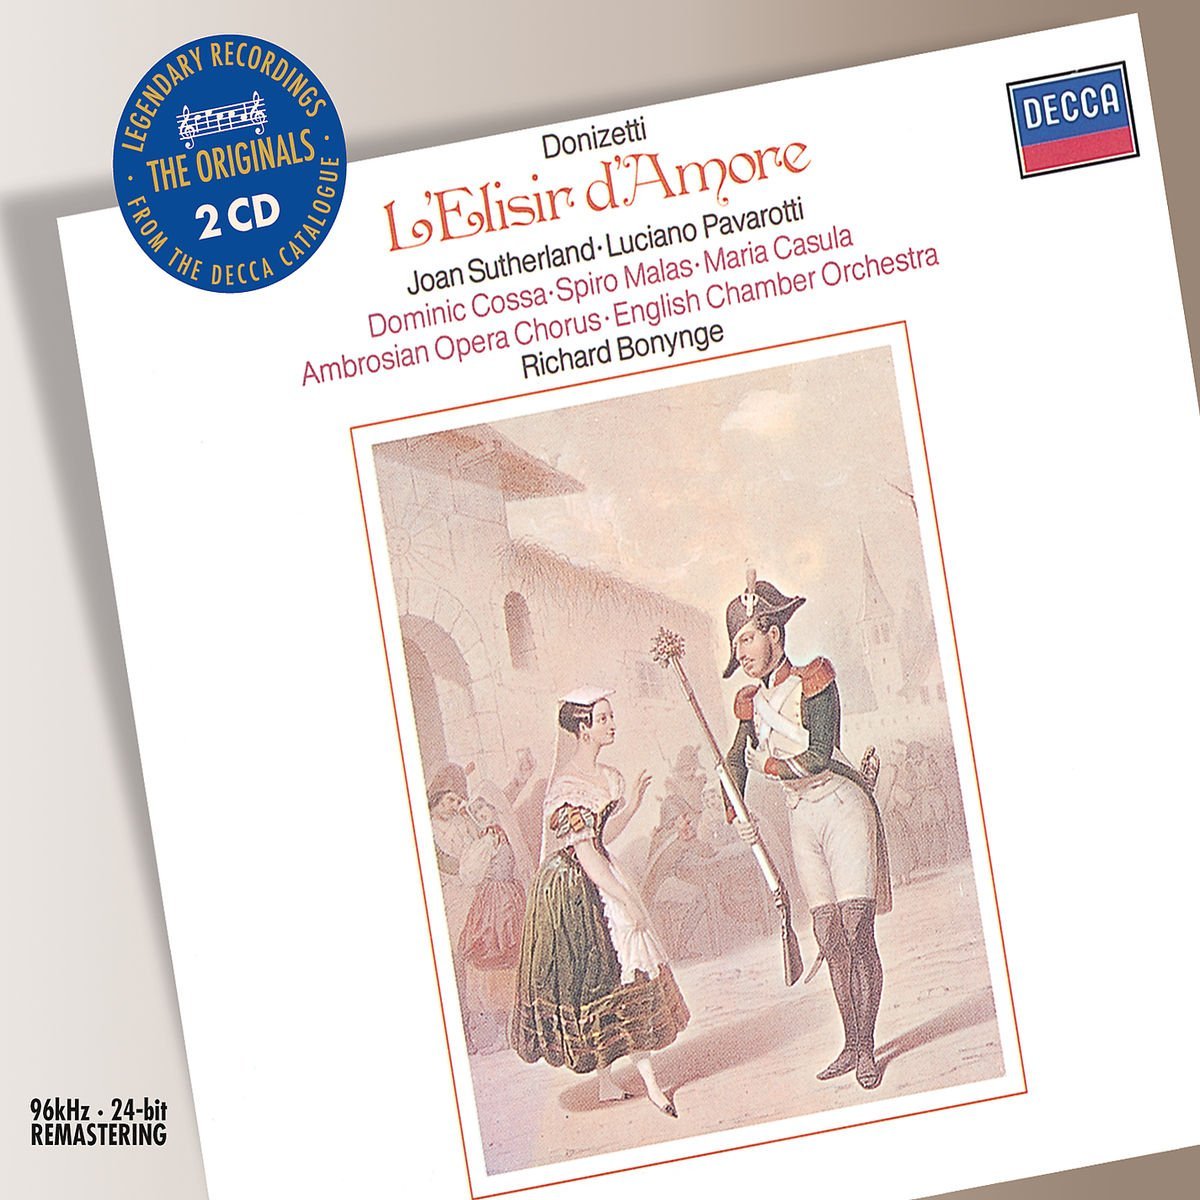 Donizetti - L'Elisir d'amore | Joan Sutherland, English Chamber Orchestra, Luciano Pavarotti